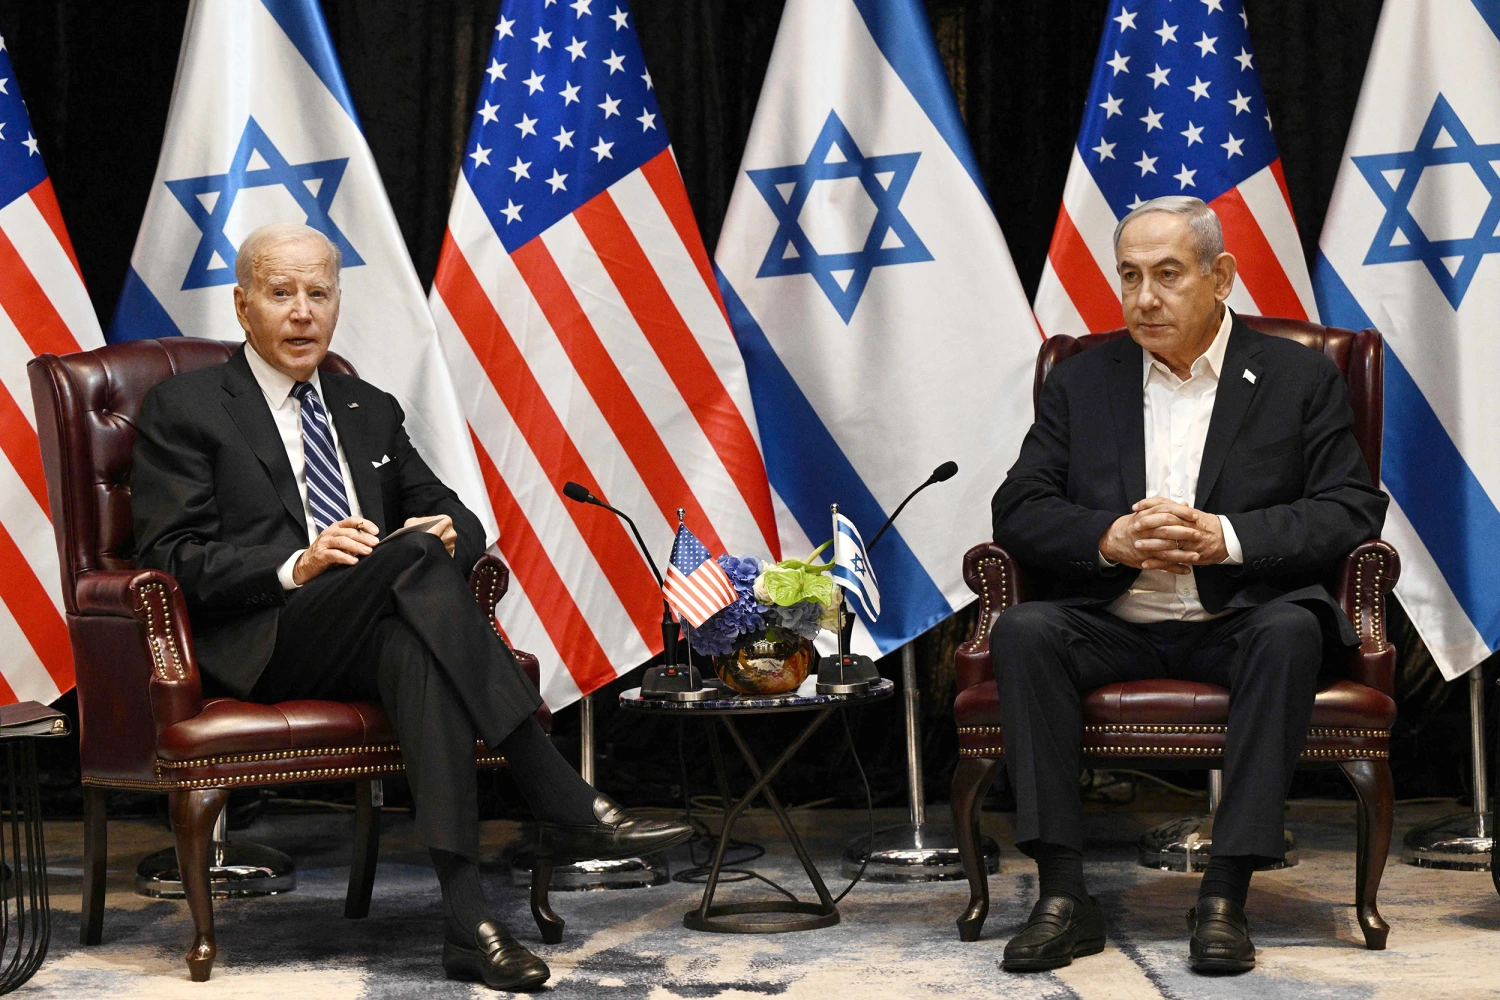 israels-pm-netanyahu-to-address-us-congress-soon-house-speaker-announce